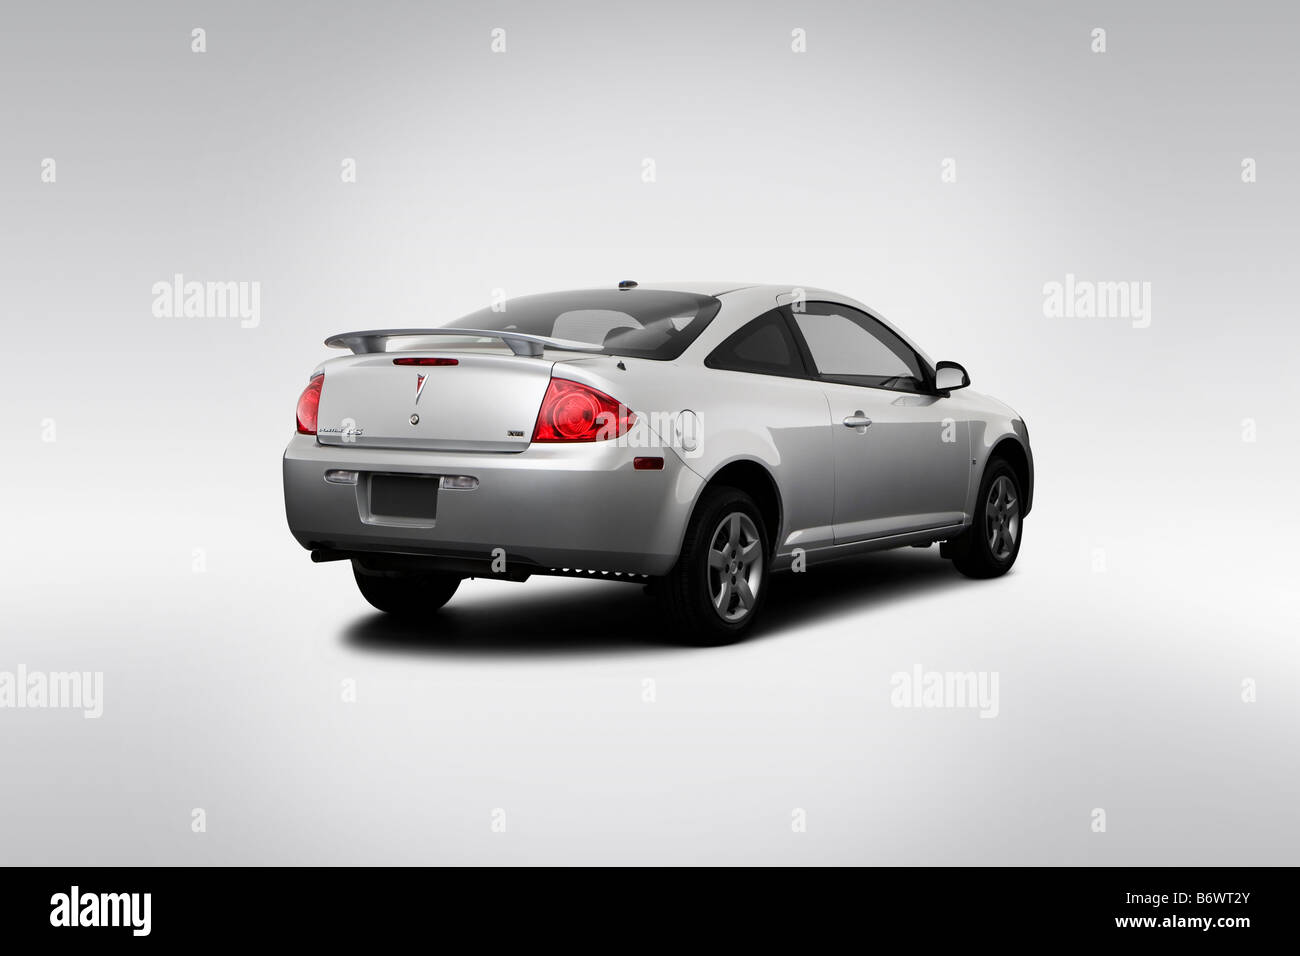 2009 Pontiac G5 in Silver - Rear angle view Stock Photo - Alamy